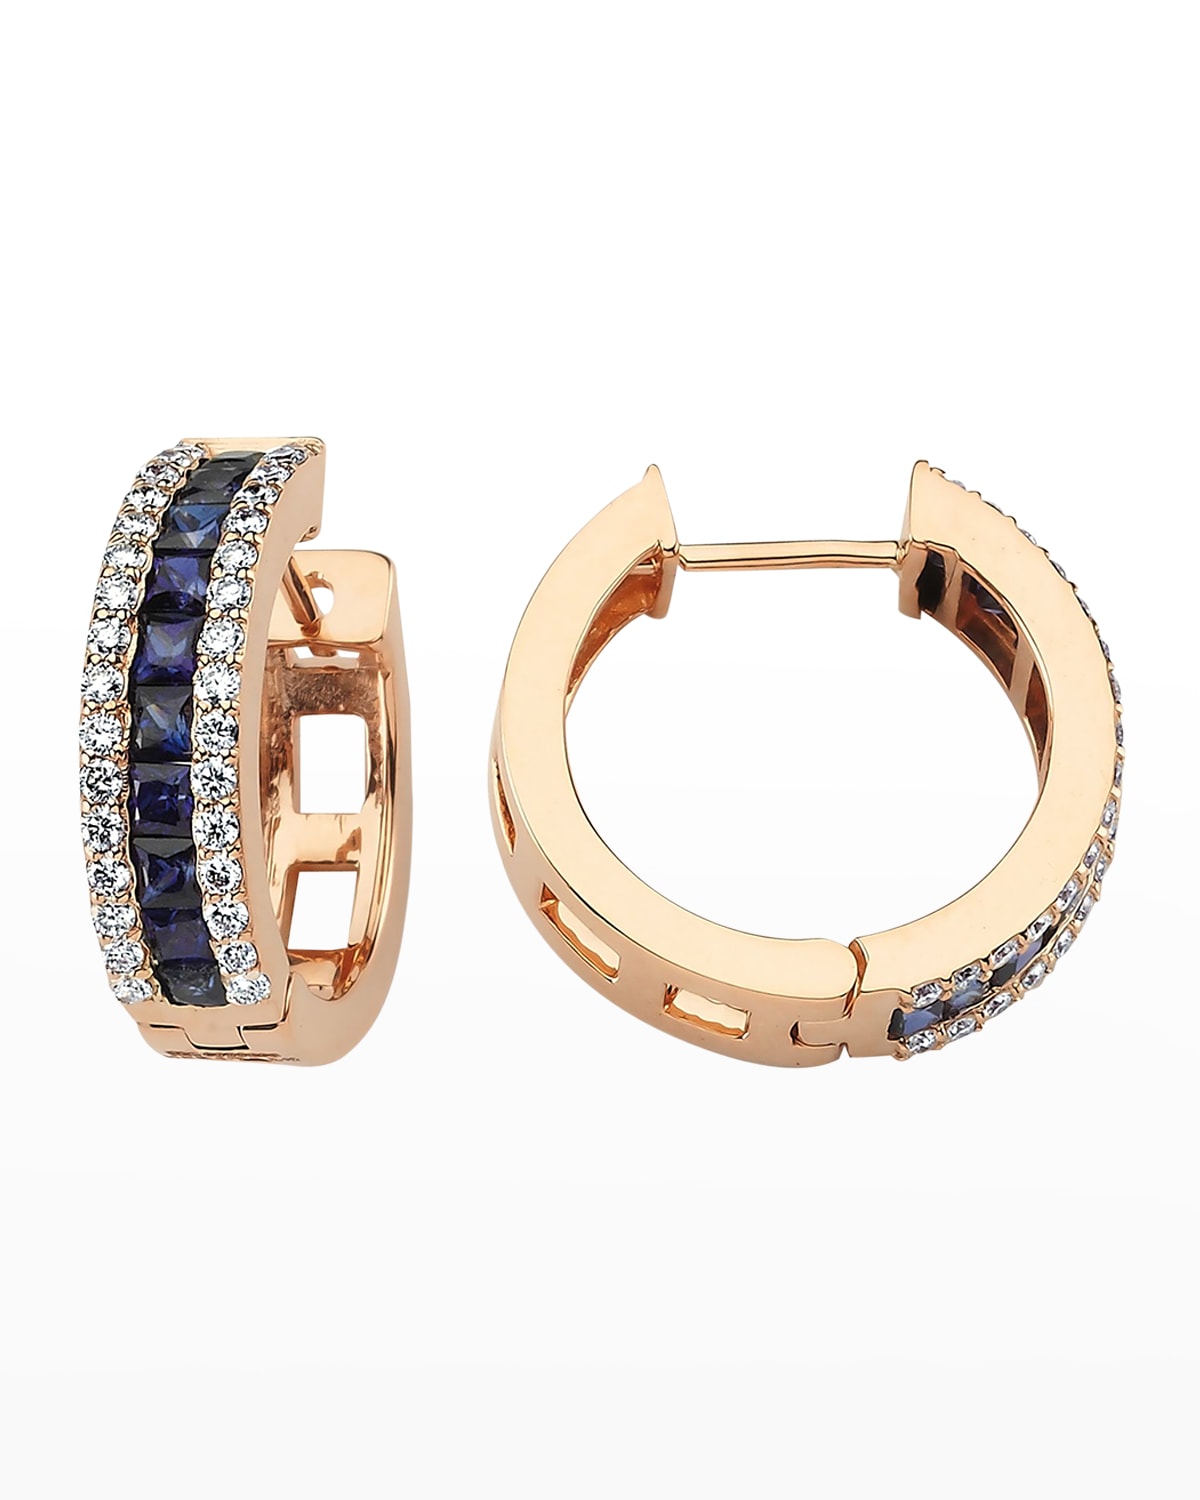 BeeGoddess Mondrian Sapphire and Diamond Earrings